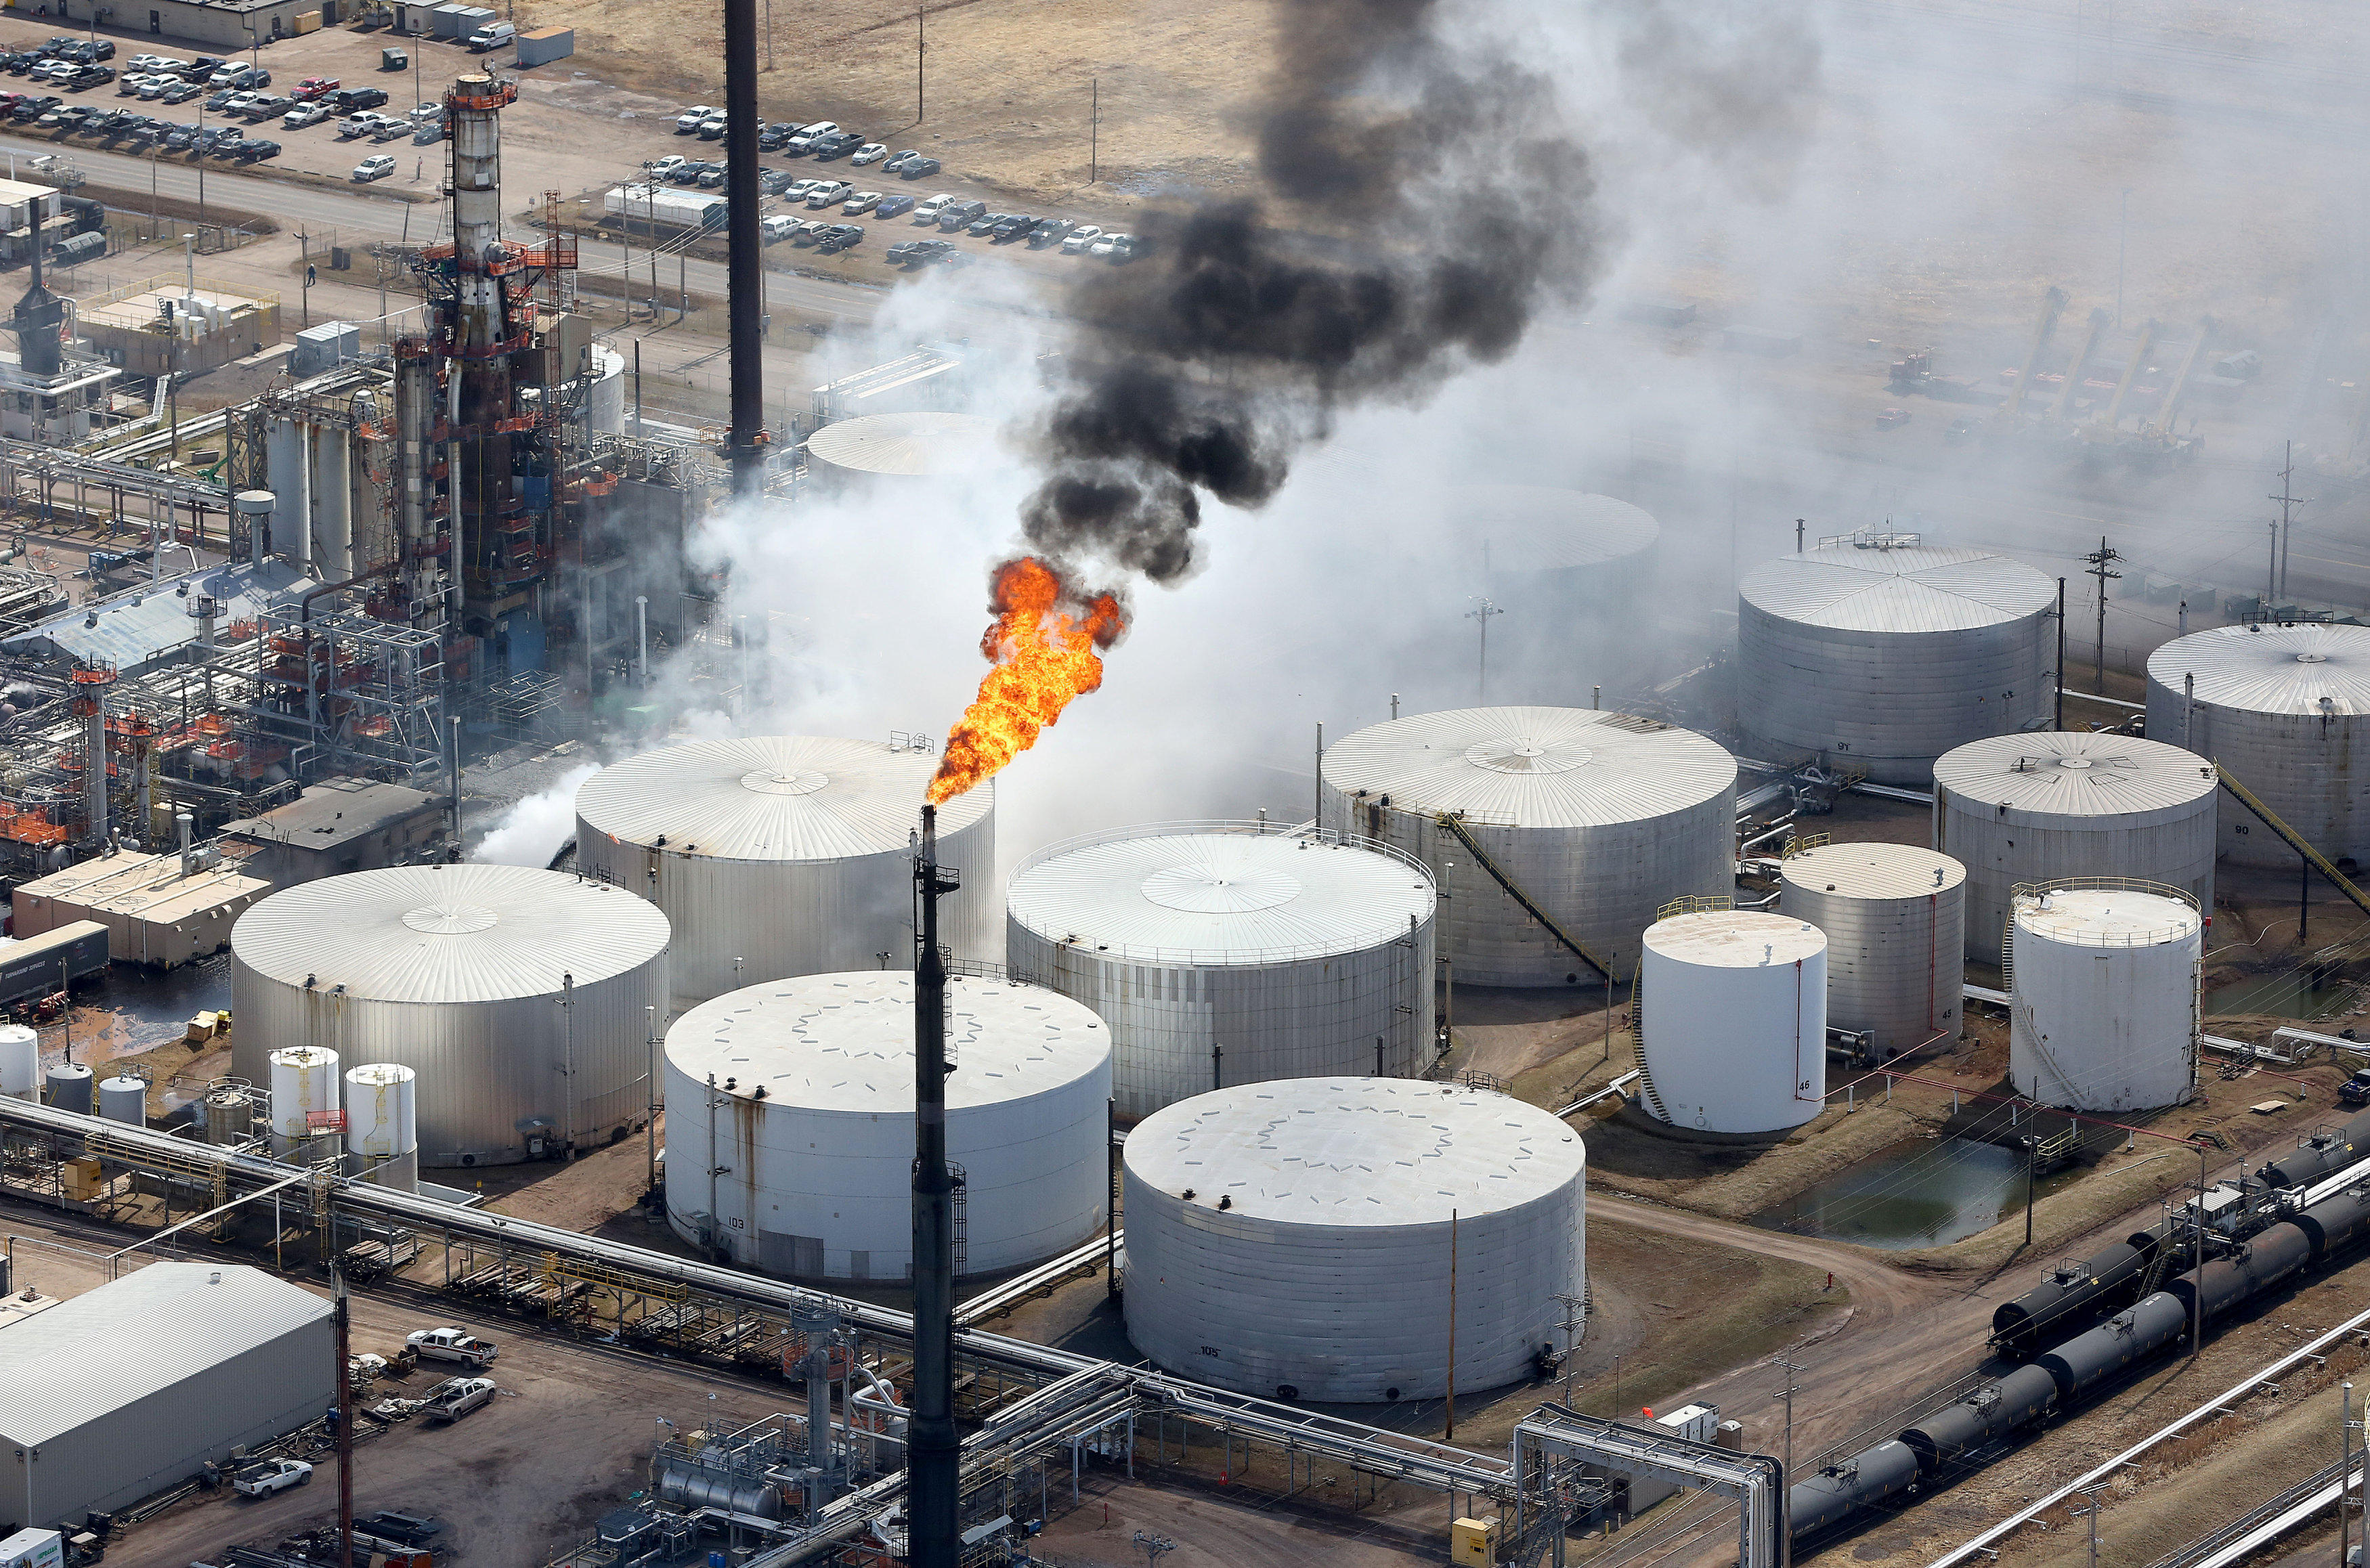 Superior, Wisconsin explosion Blast rocks Husky Energy oil refinery in